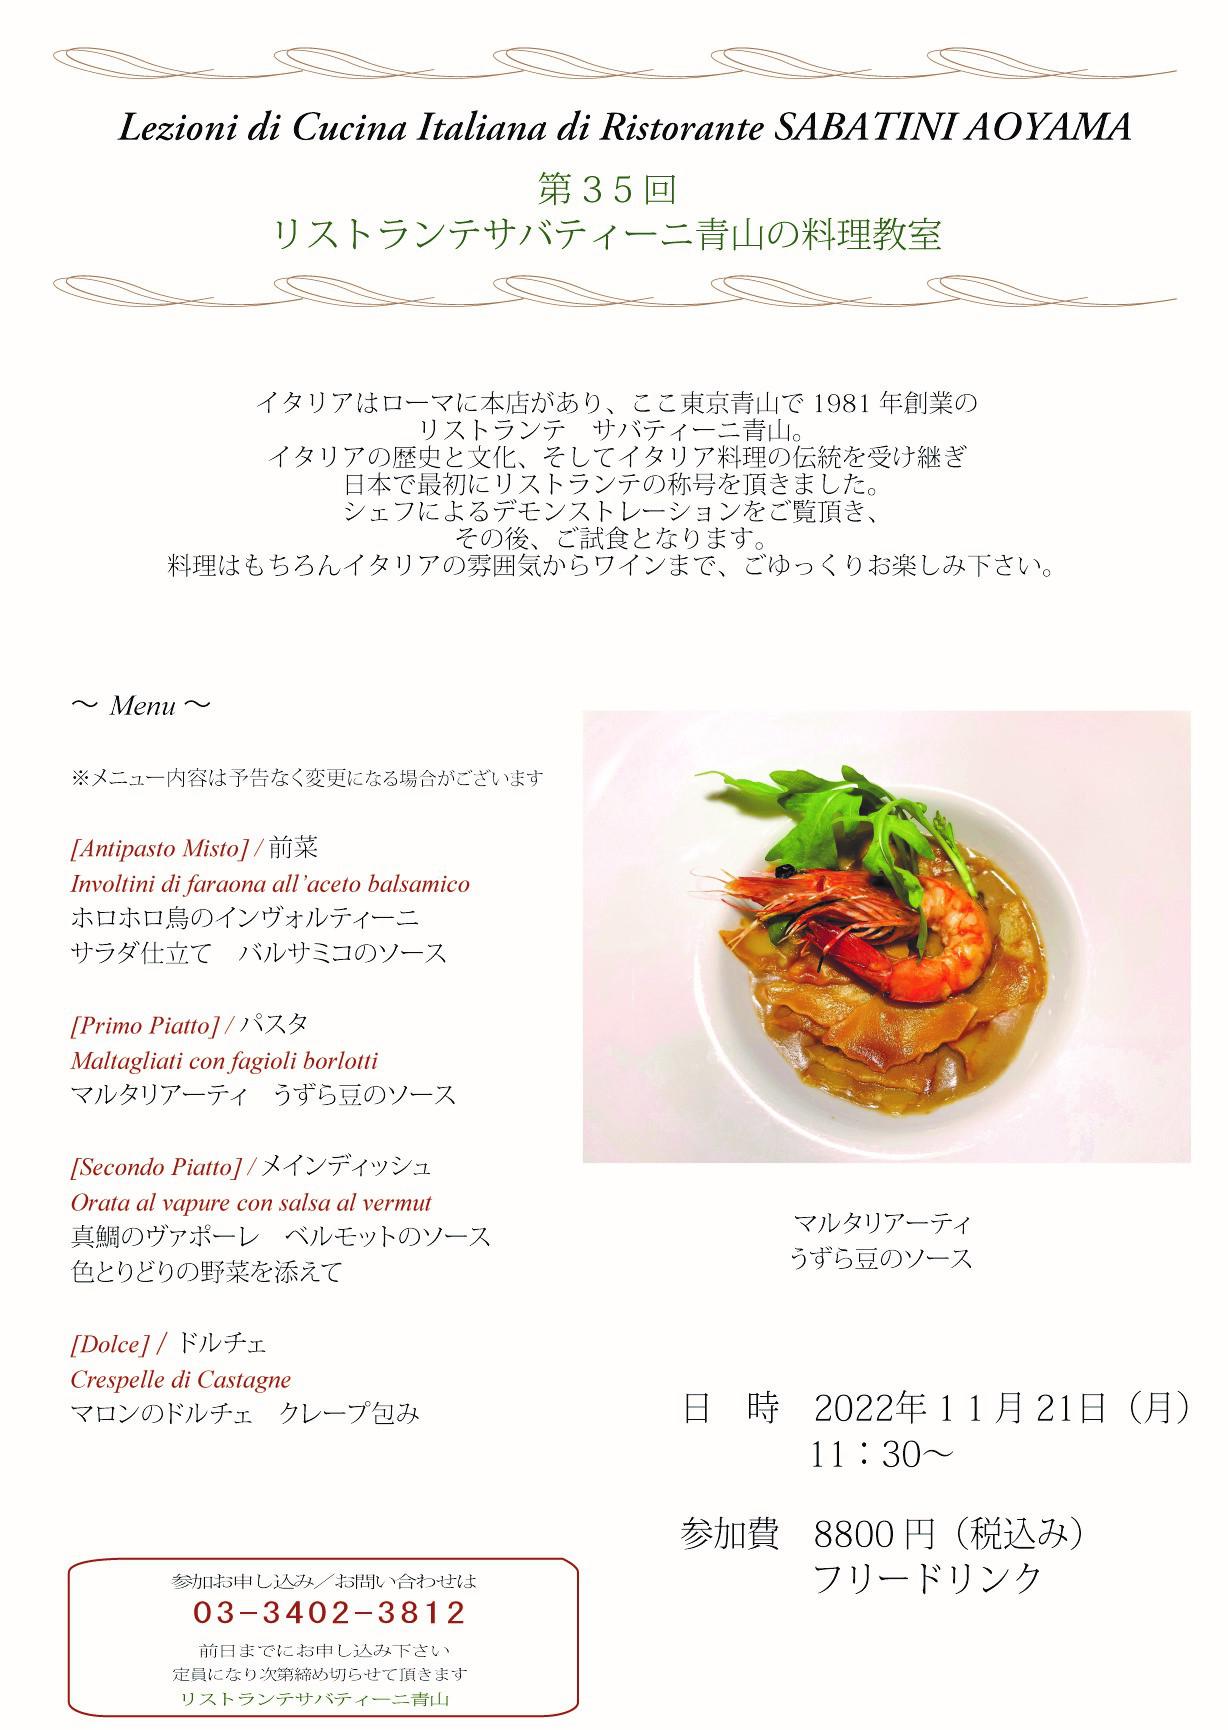 ■Ristorante SABATINI Aoyama【料理教室】2022.11.21（月）のお知らせ